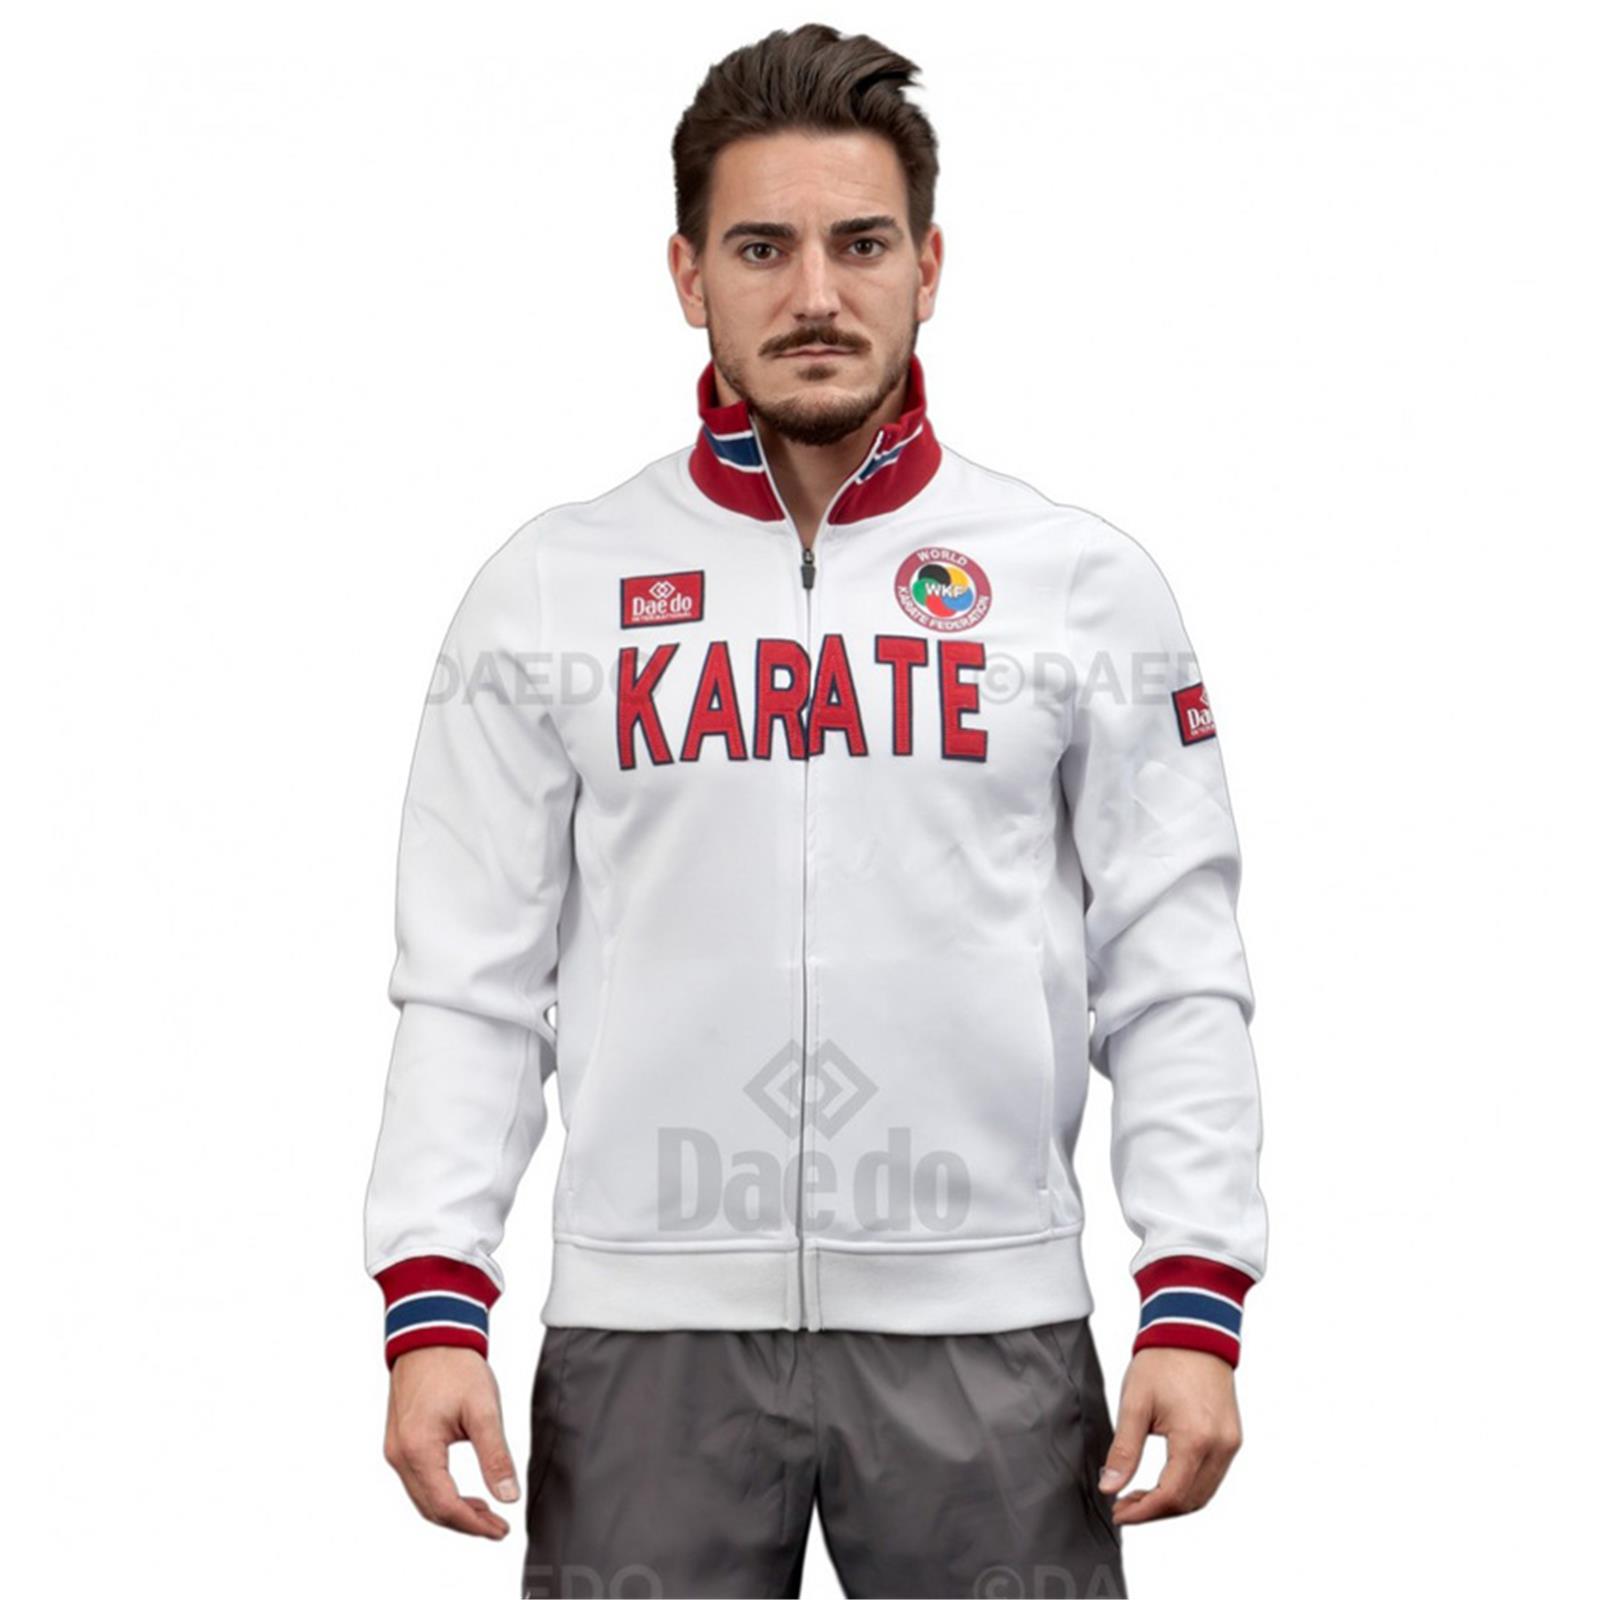 Dae Do Felpa Sportiva Karate slim jacket bianca (M - BIANCO)